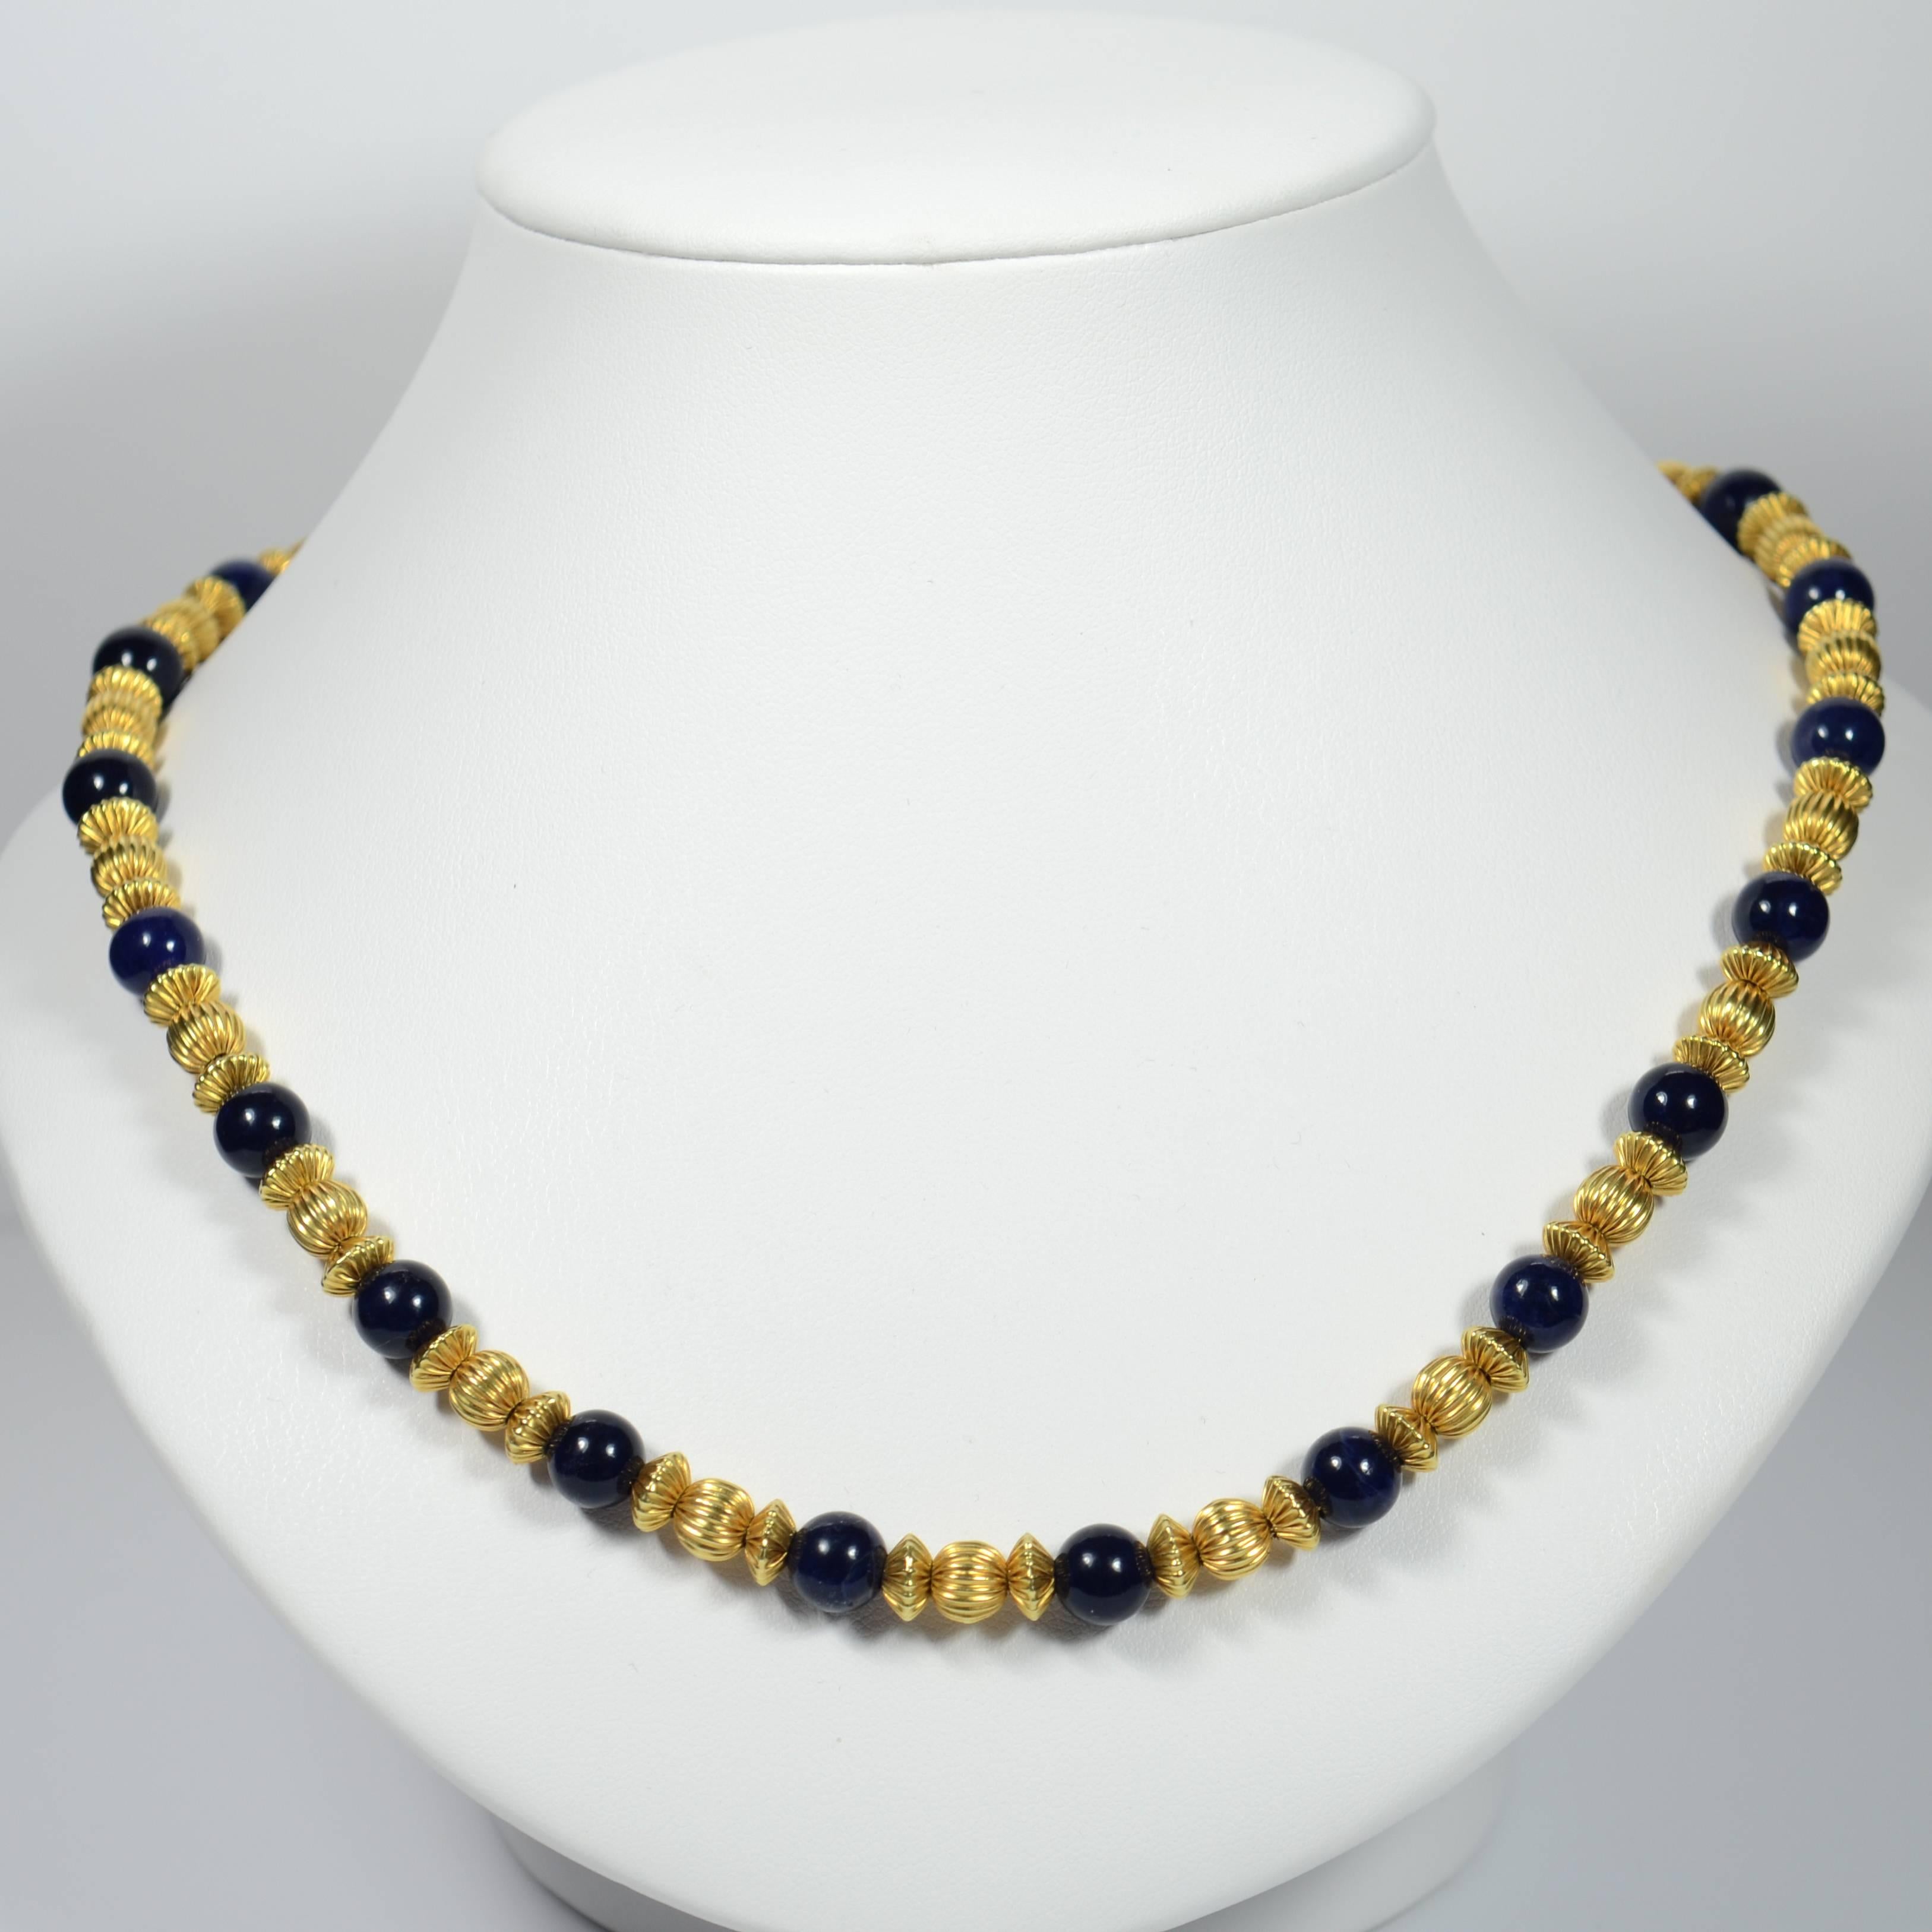 Women's Ilias Lalaounis Sodalite Gold Beads Necklace, circa 1980